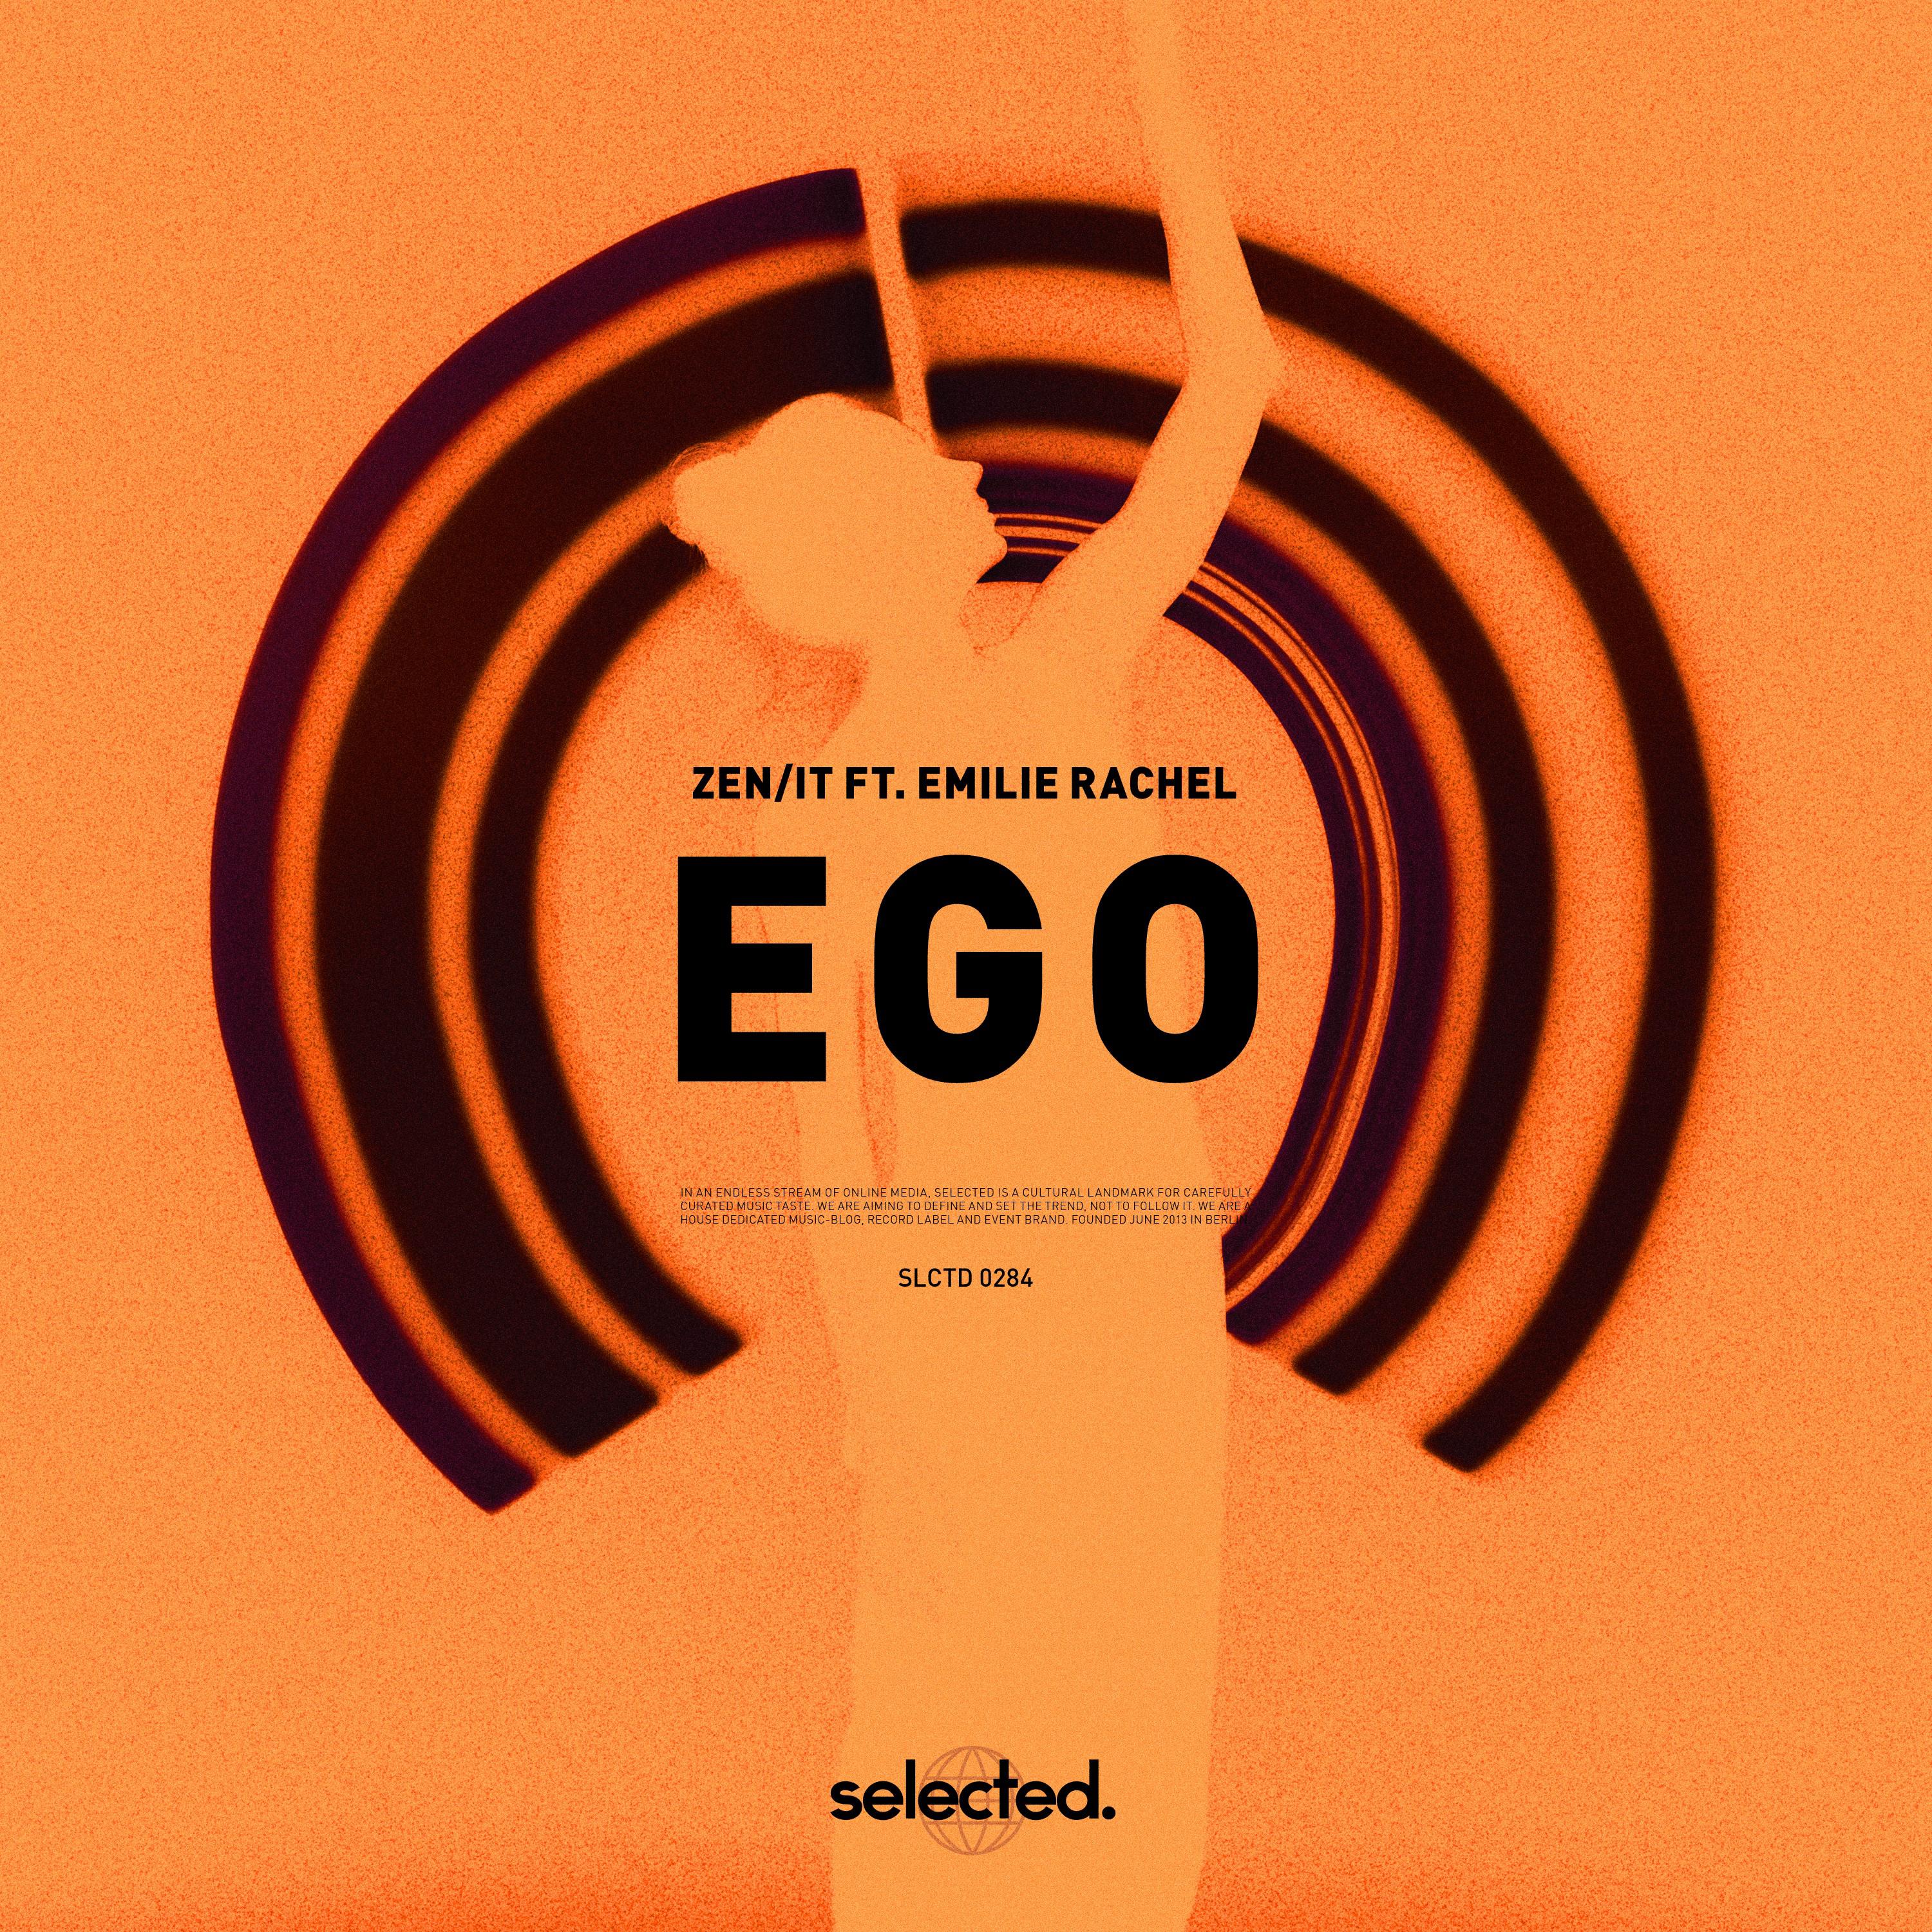 Zen/it - Ego (Extended)